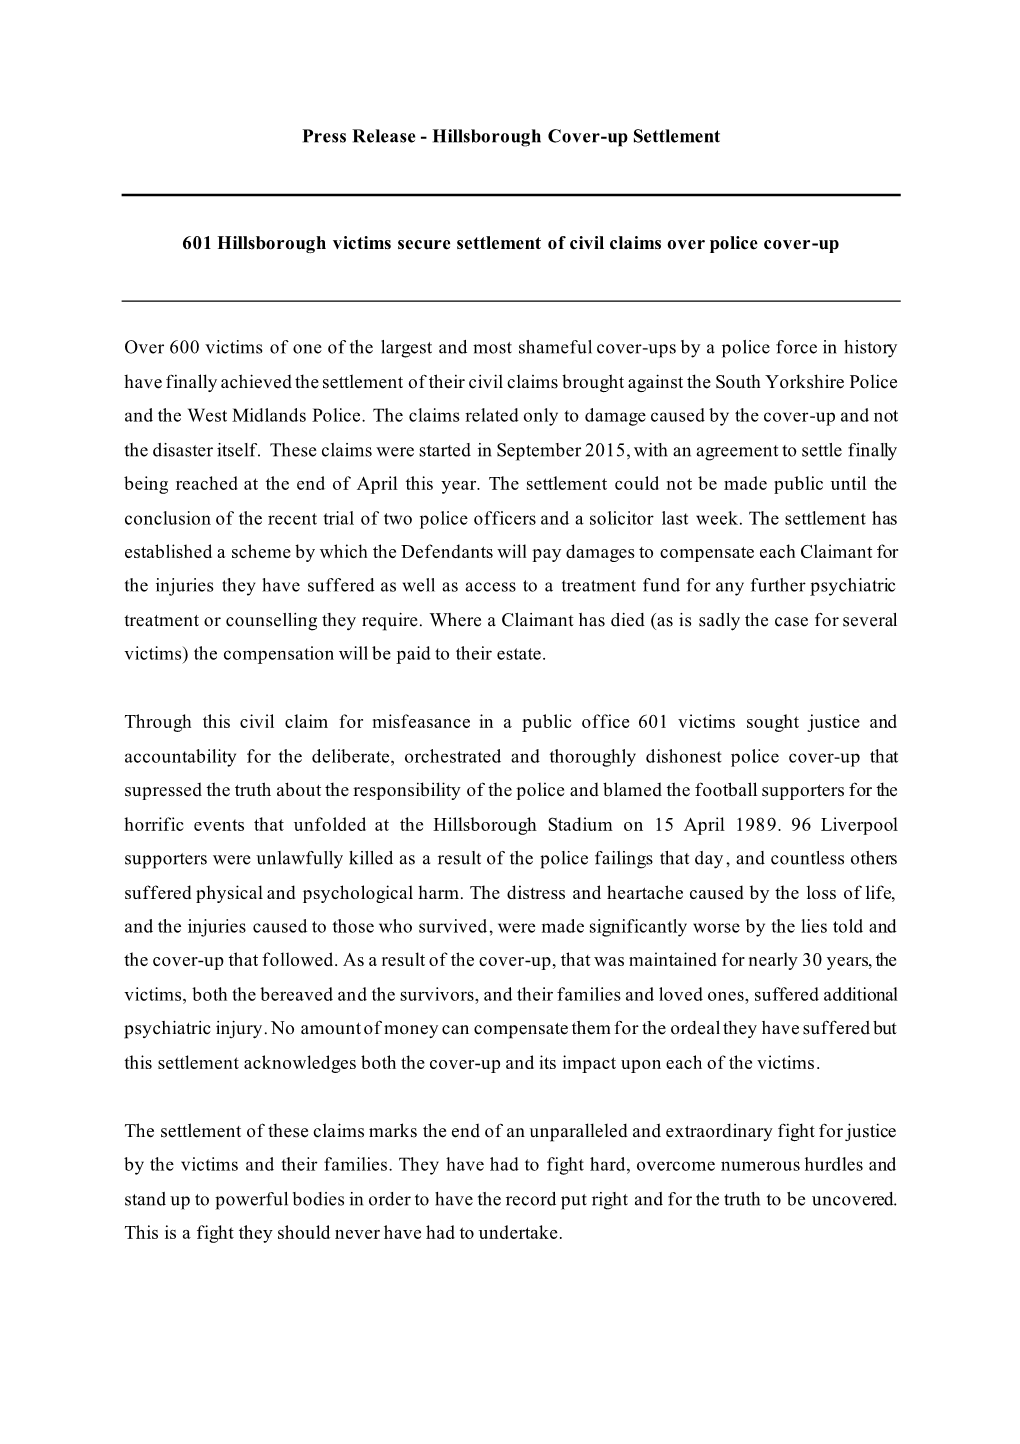 Press Release - Hillsborough Cover-Up Settlement